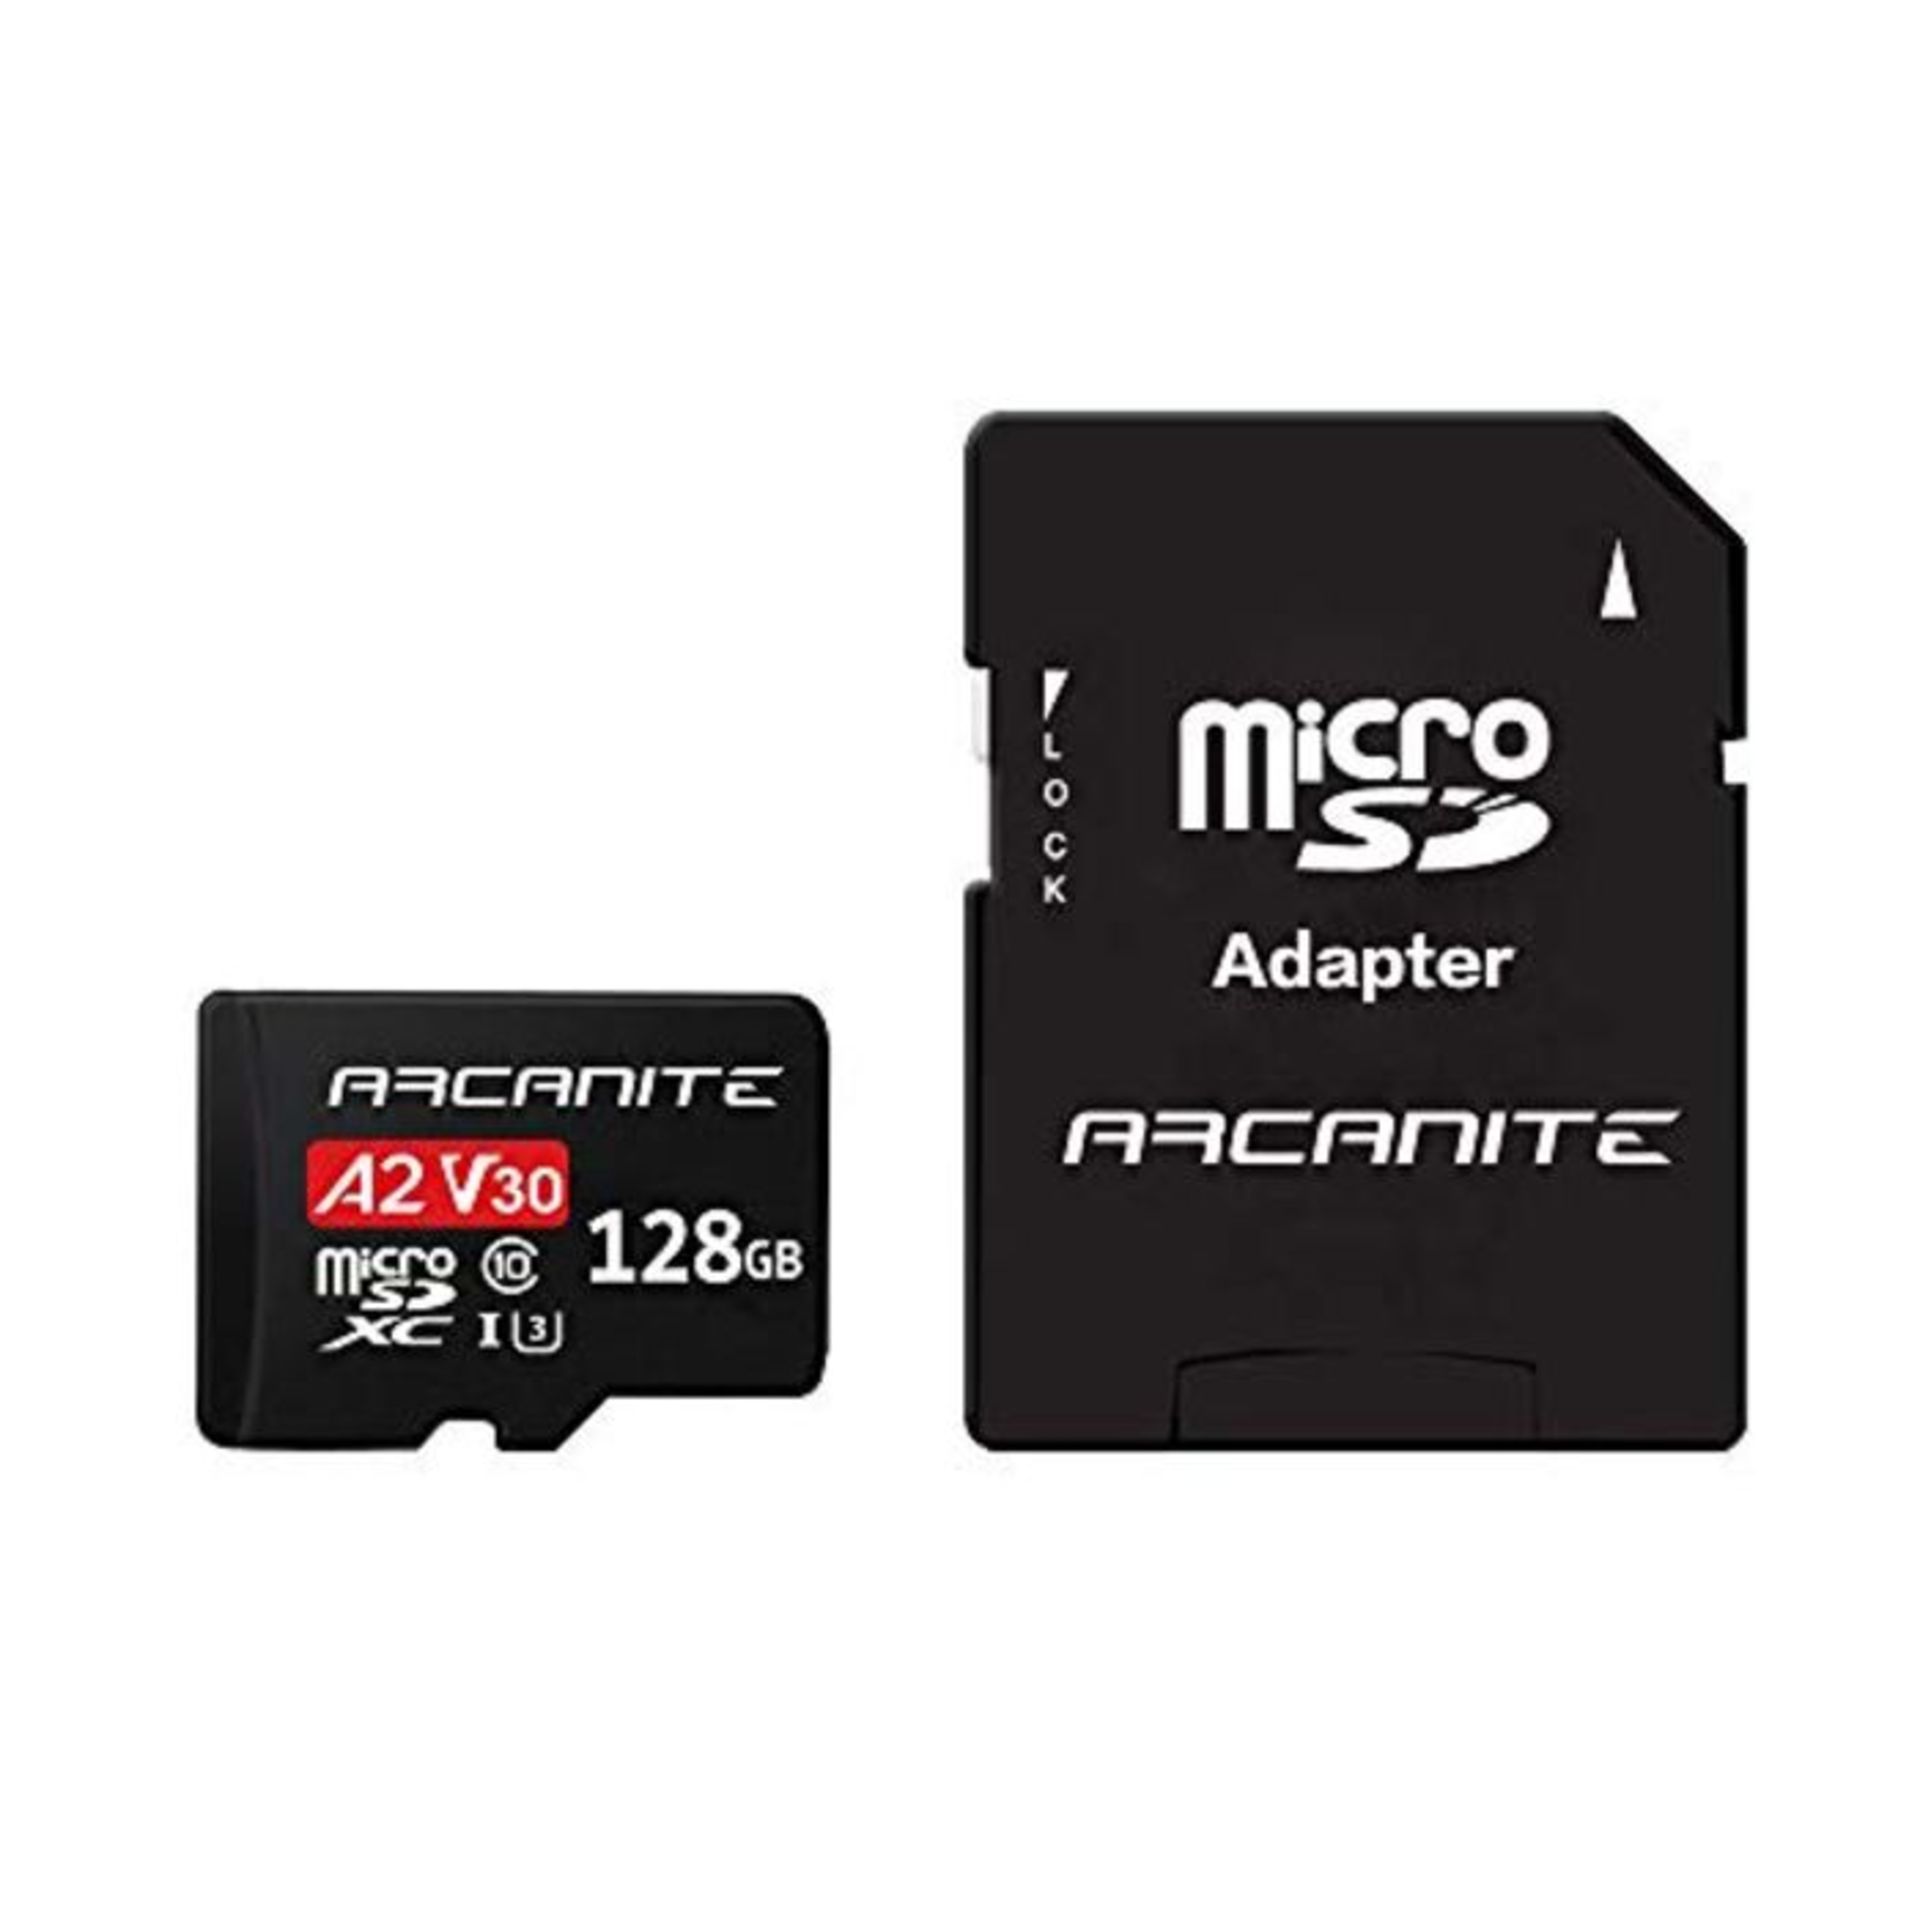 ARCANITE 128GB microSDXC Memory Card with Adapter - A2, UHS-I U3, V30, 4K, C10, Micro